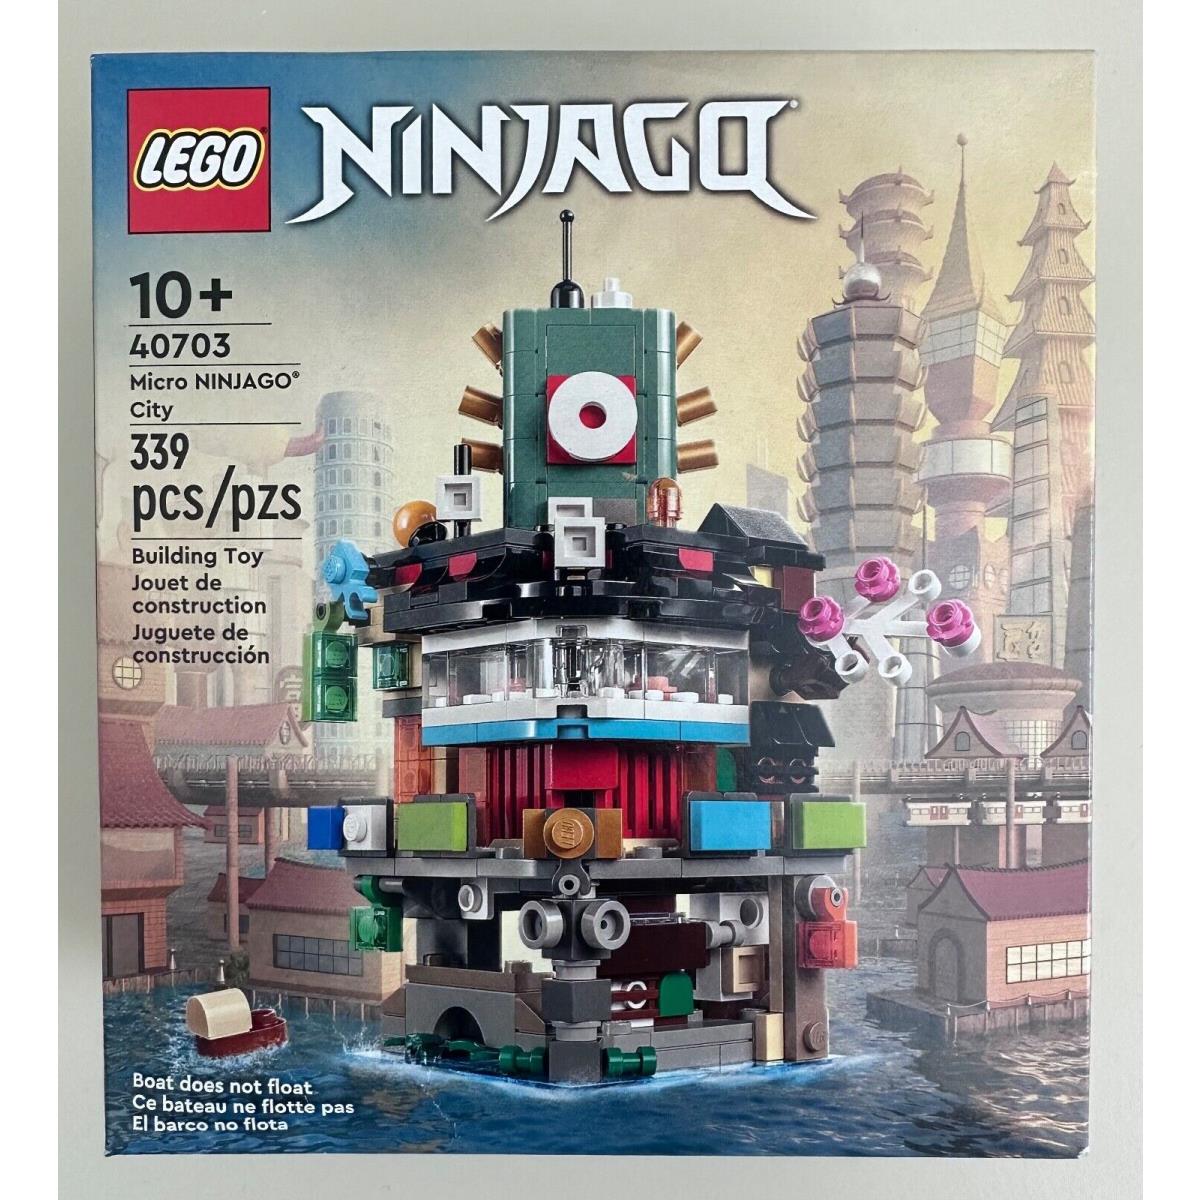 Lego Ninjago 40703: Micro Ninjago City 339 Piece Building Kit Toy Set 10+